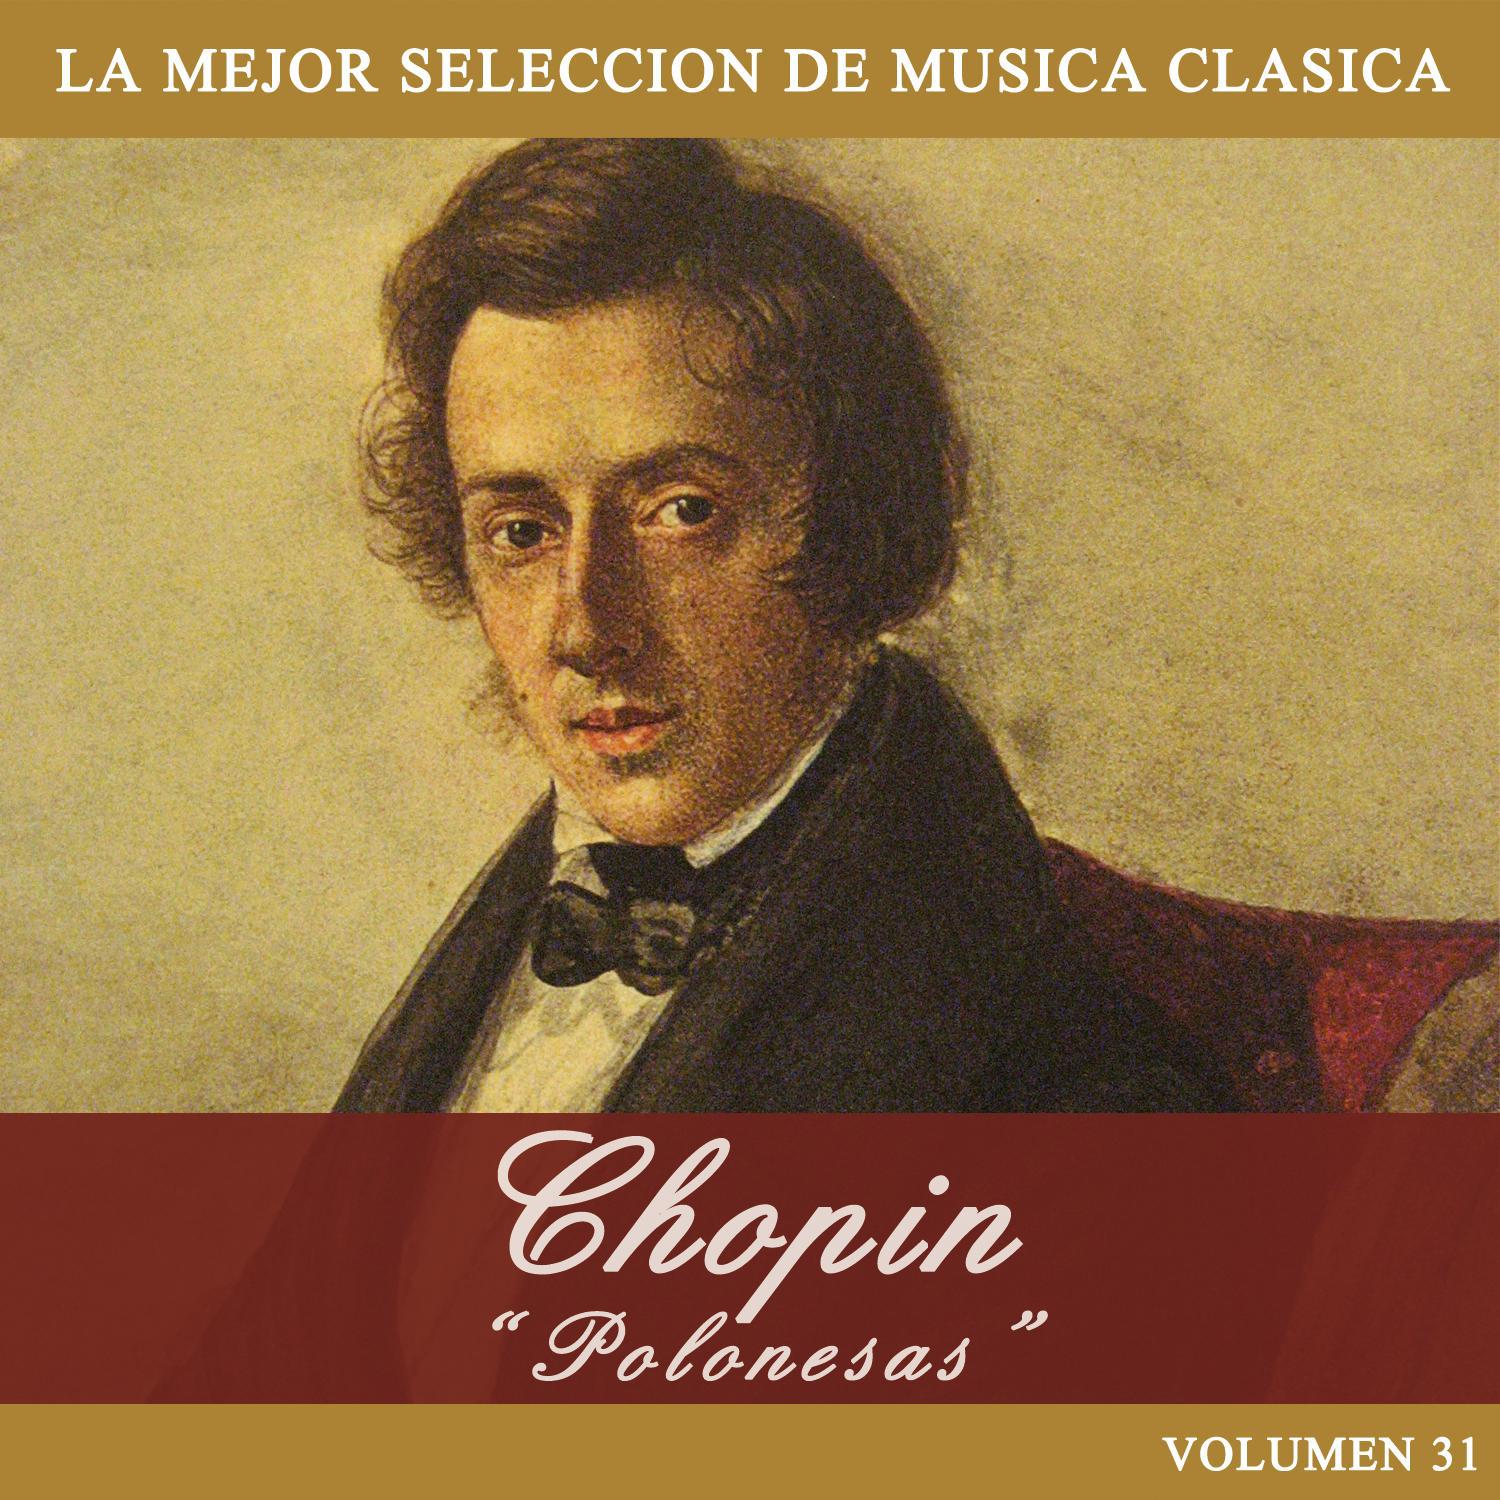 Chopin: Polonesas